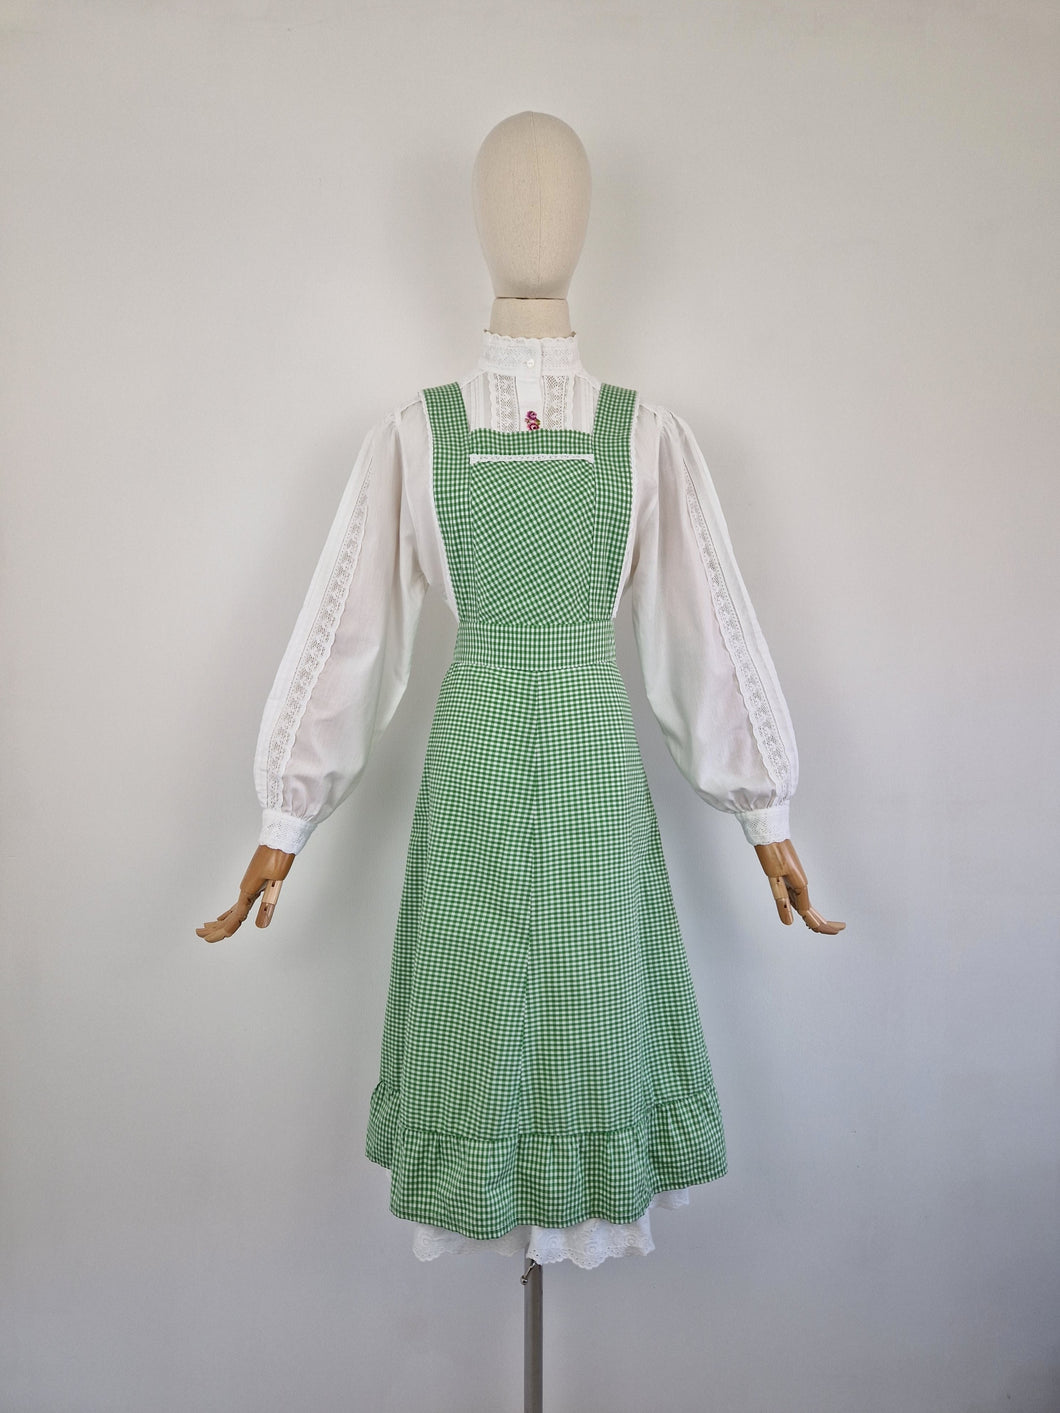 Vintage 70s gingham pinafore dress